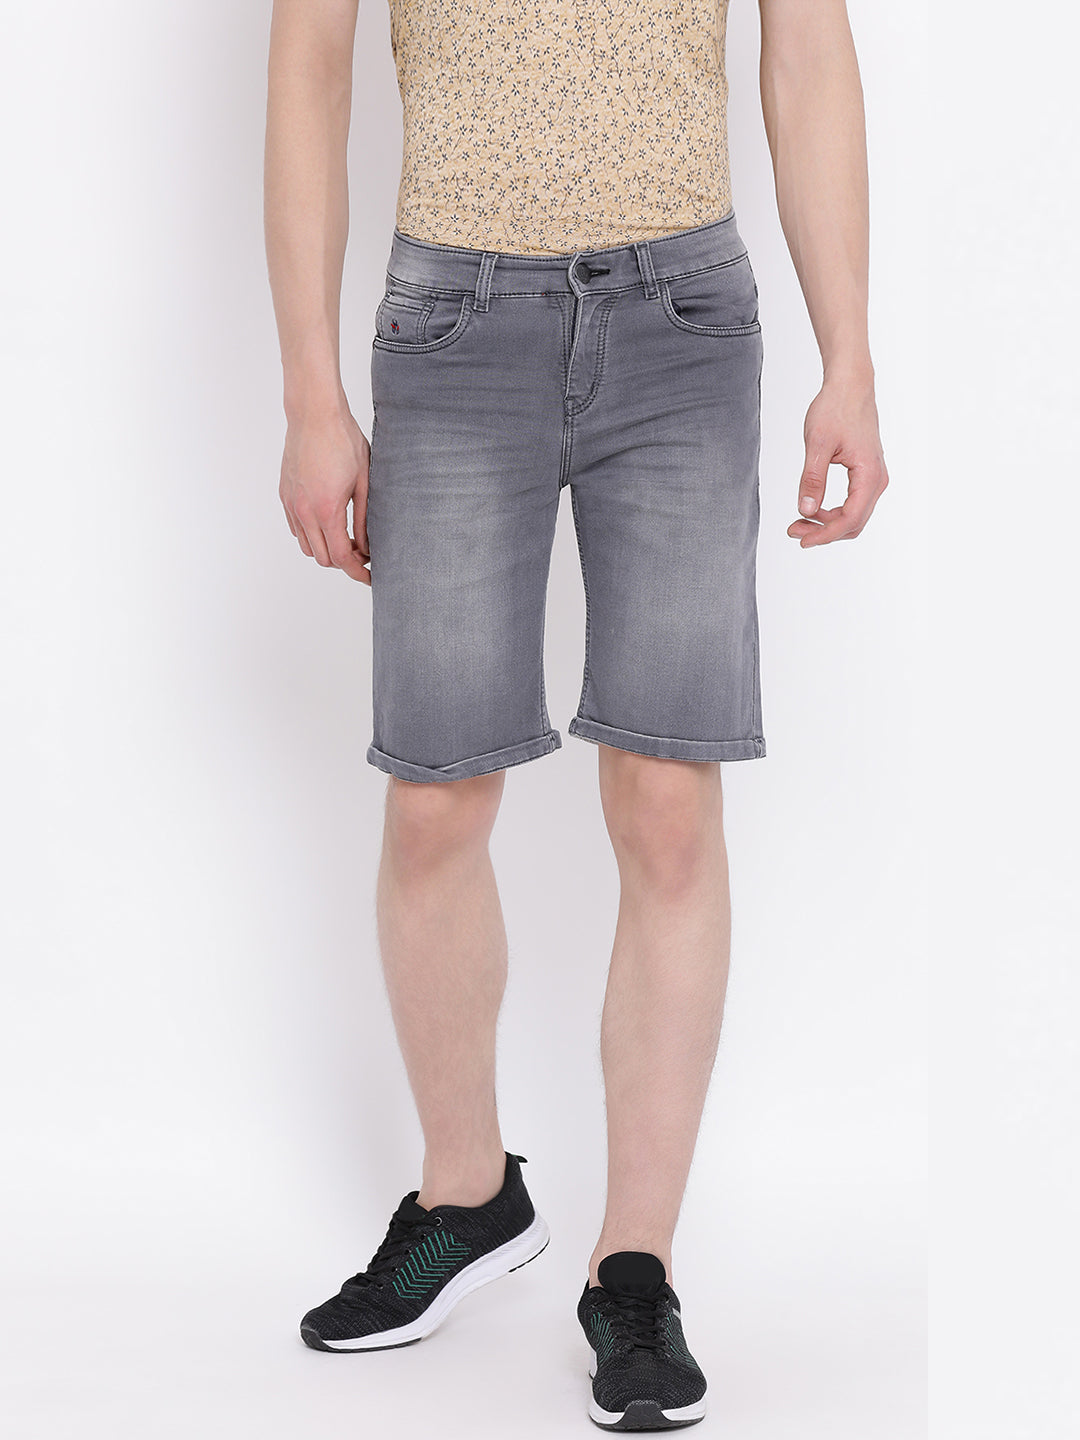 Grey shorts - Men Shorts